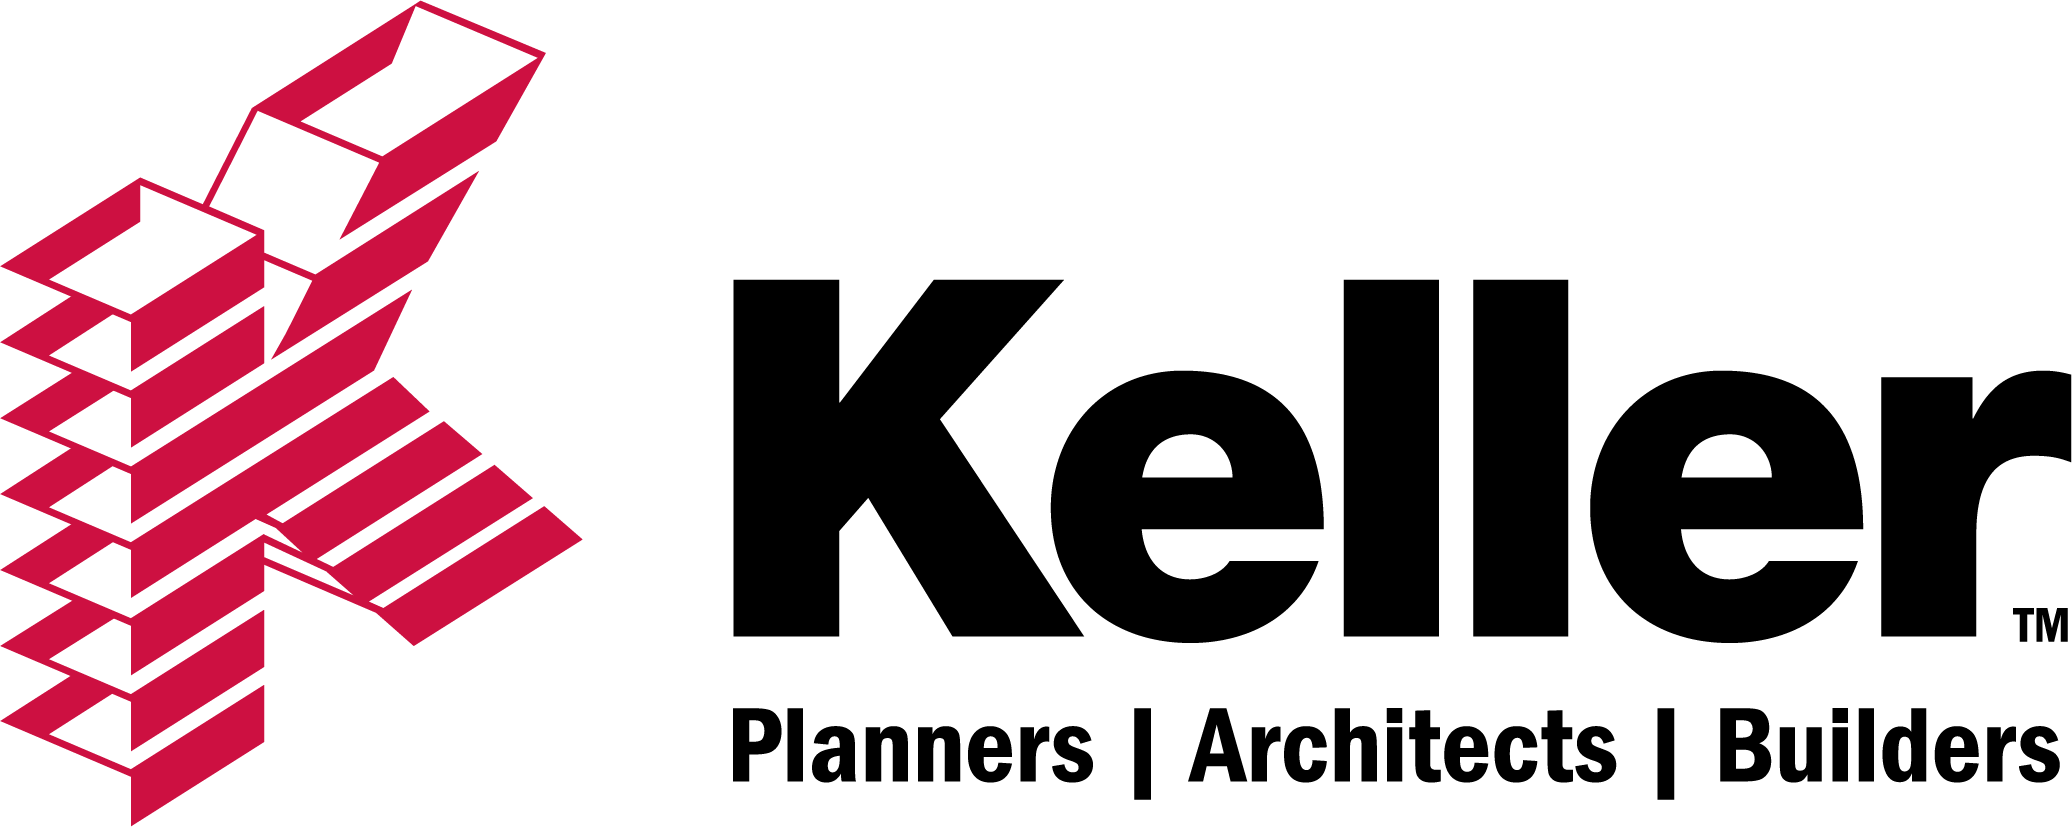 Keller, Logo & PAB Horiztonal (red & black).png